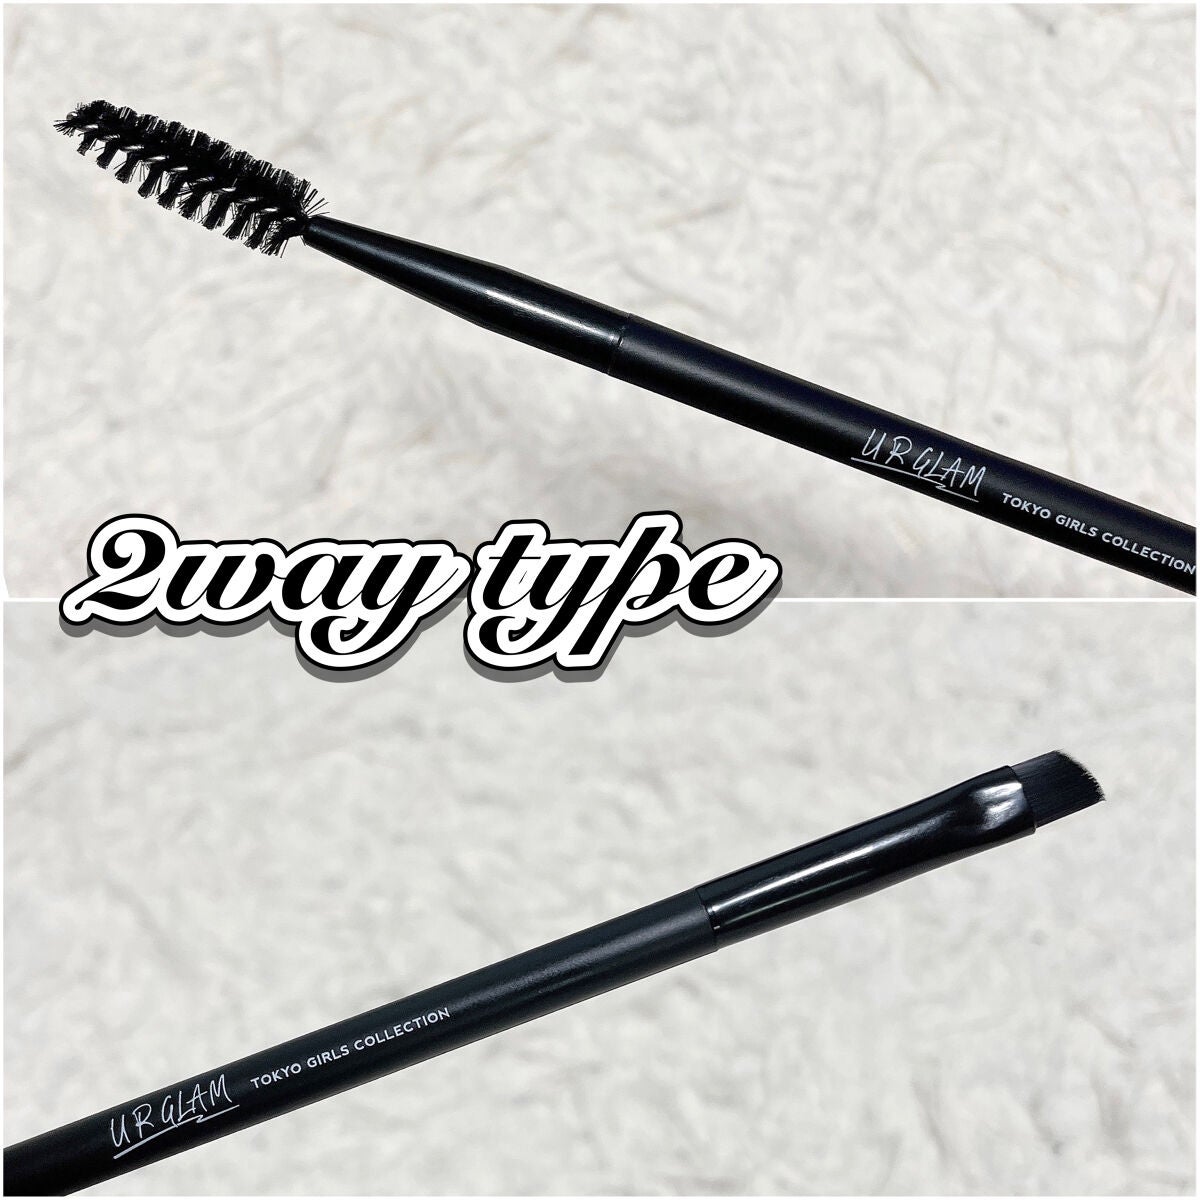 UR GLAM Tokyo Girls collection Duo eyebrow/spoolie makeup Brush